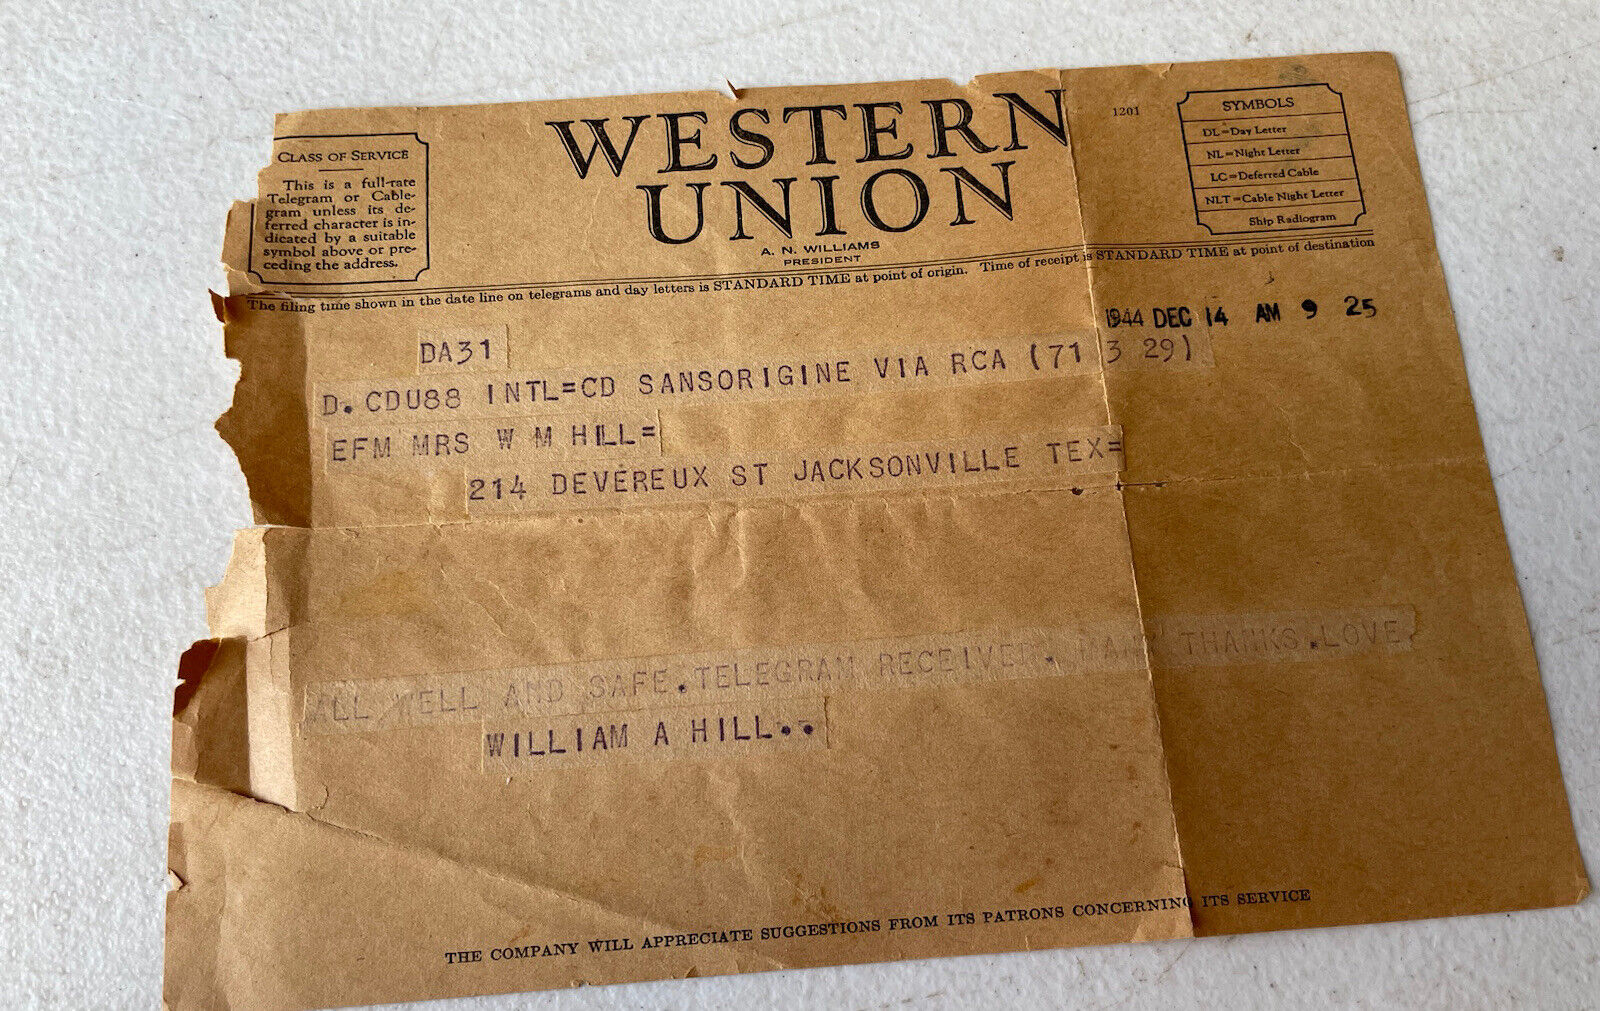 western union telegram 1944 December Jacksonville Texas